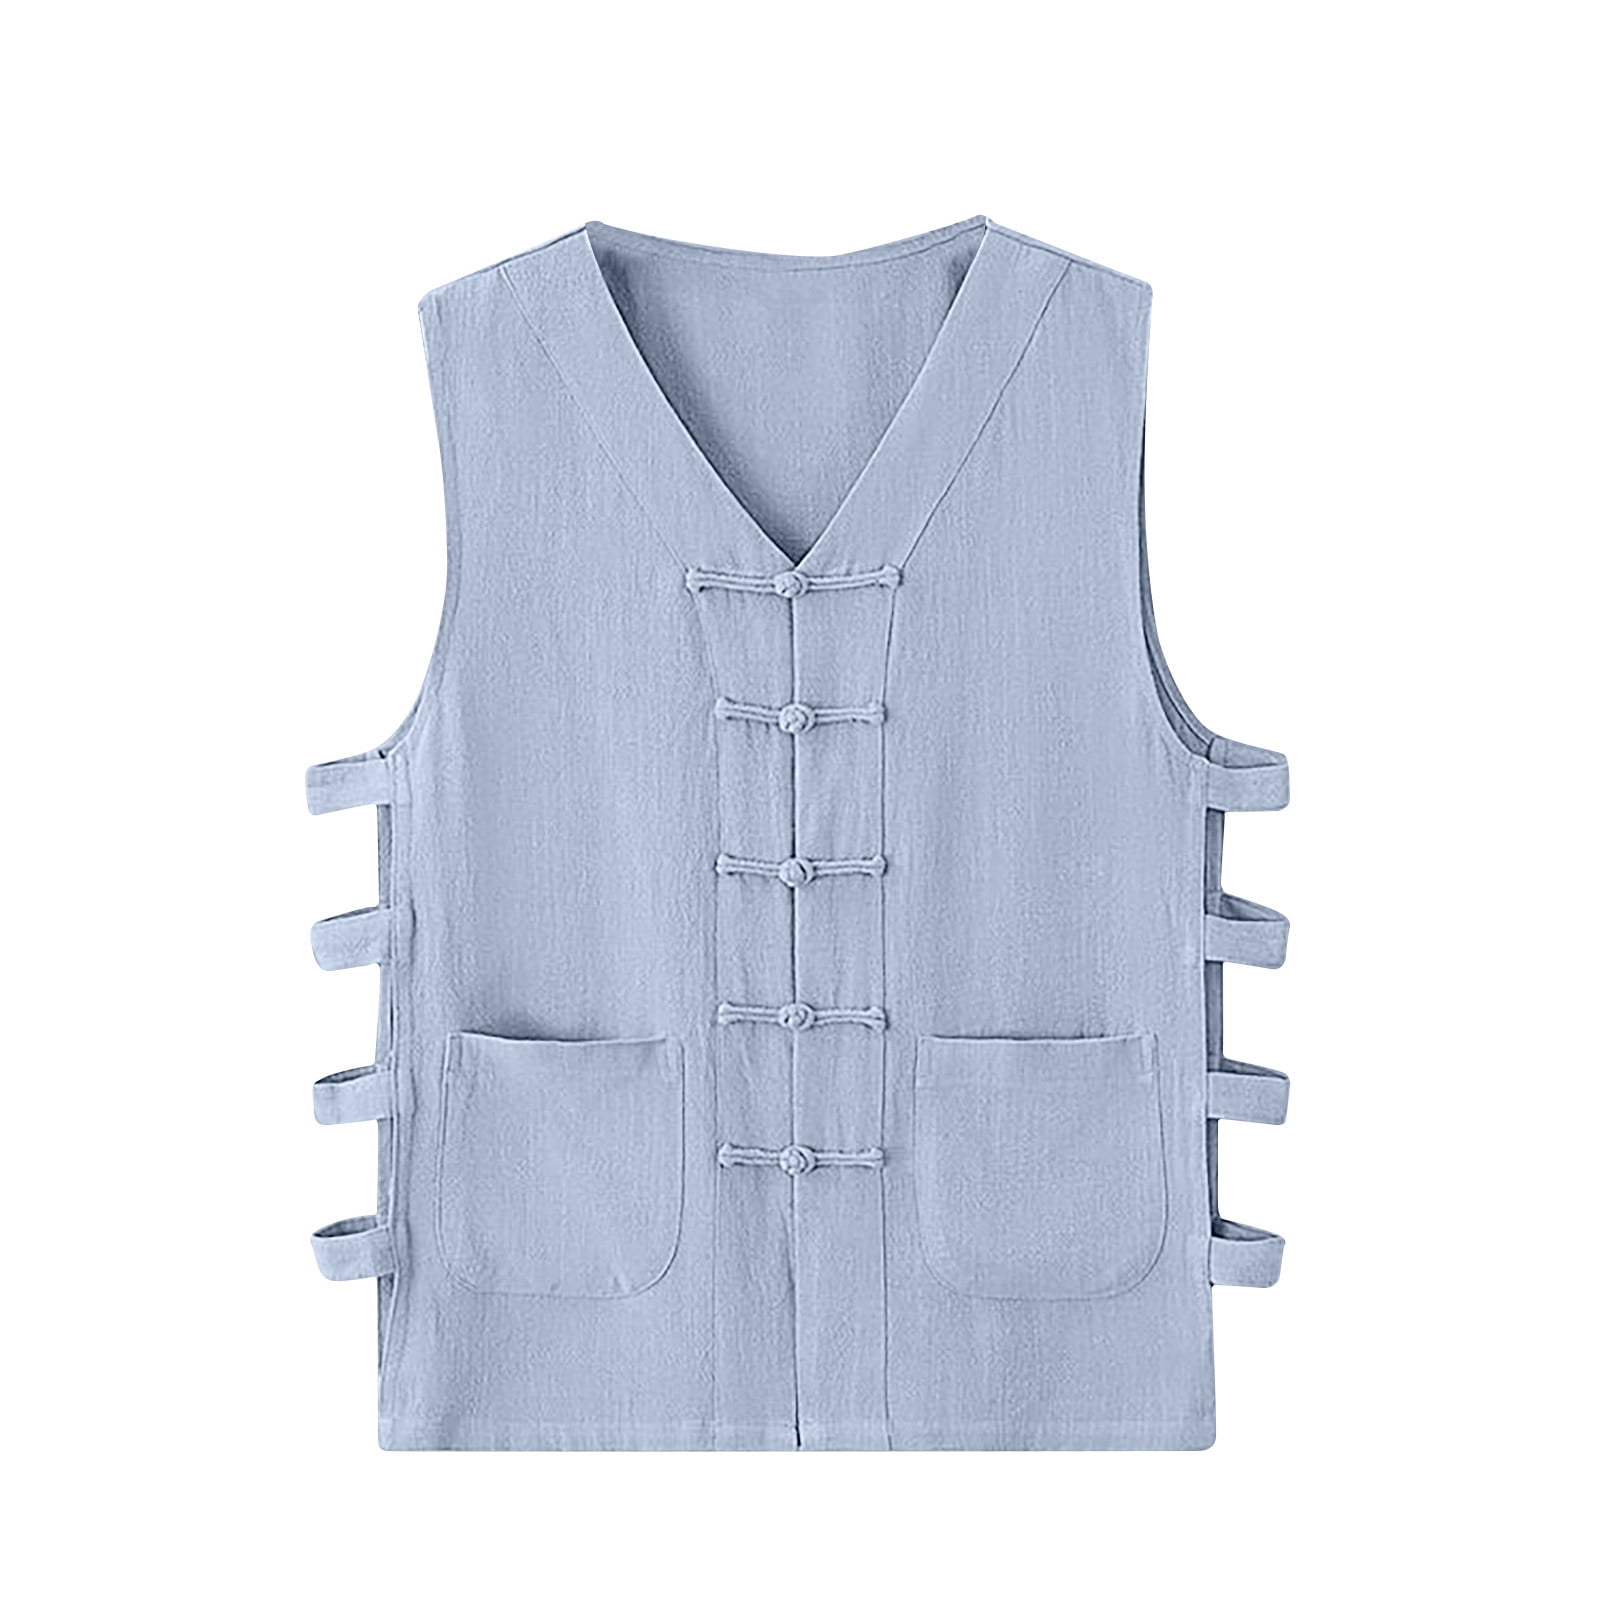 Oalirro Mens Undershirts V-Neck Sleeveless Cotton Linen Waistcoat for ...